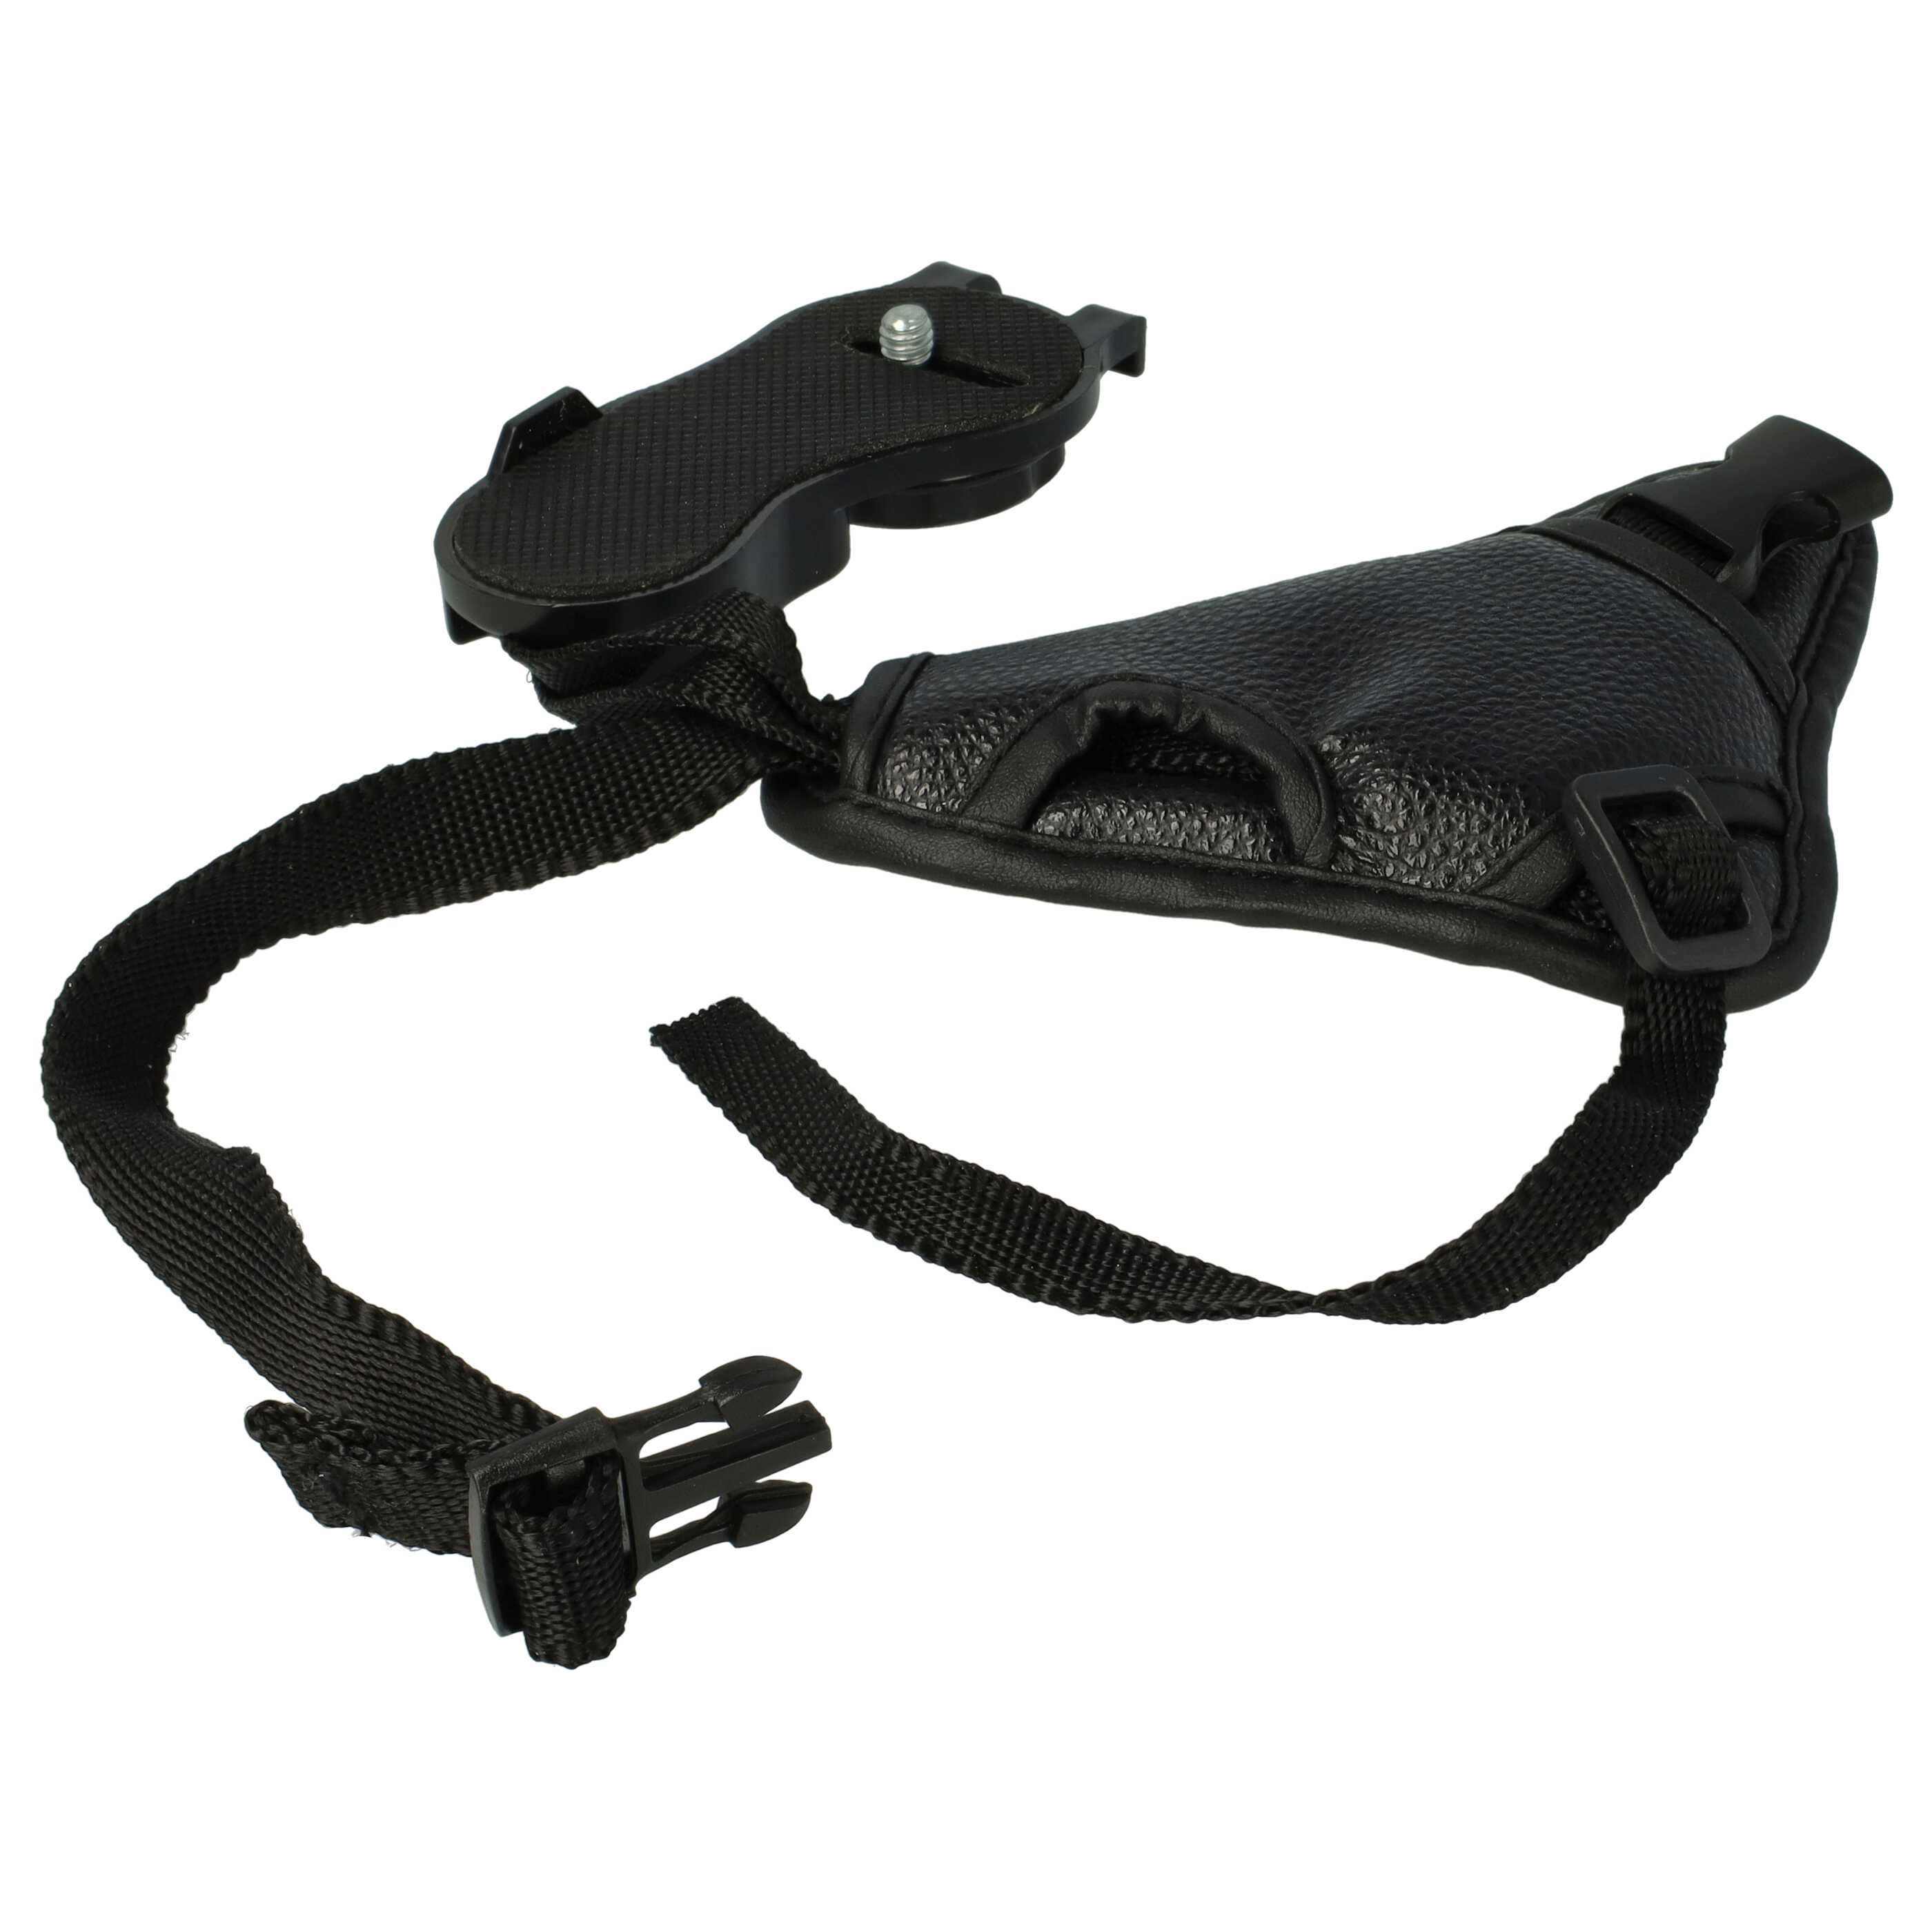 Hand Strap with tripod mount padded blackfor camera, DSLR, compact camera, replaces Nikon, Kodak, Canon, Sony,